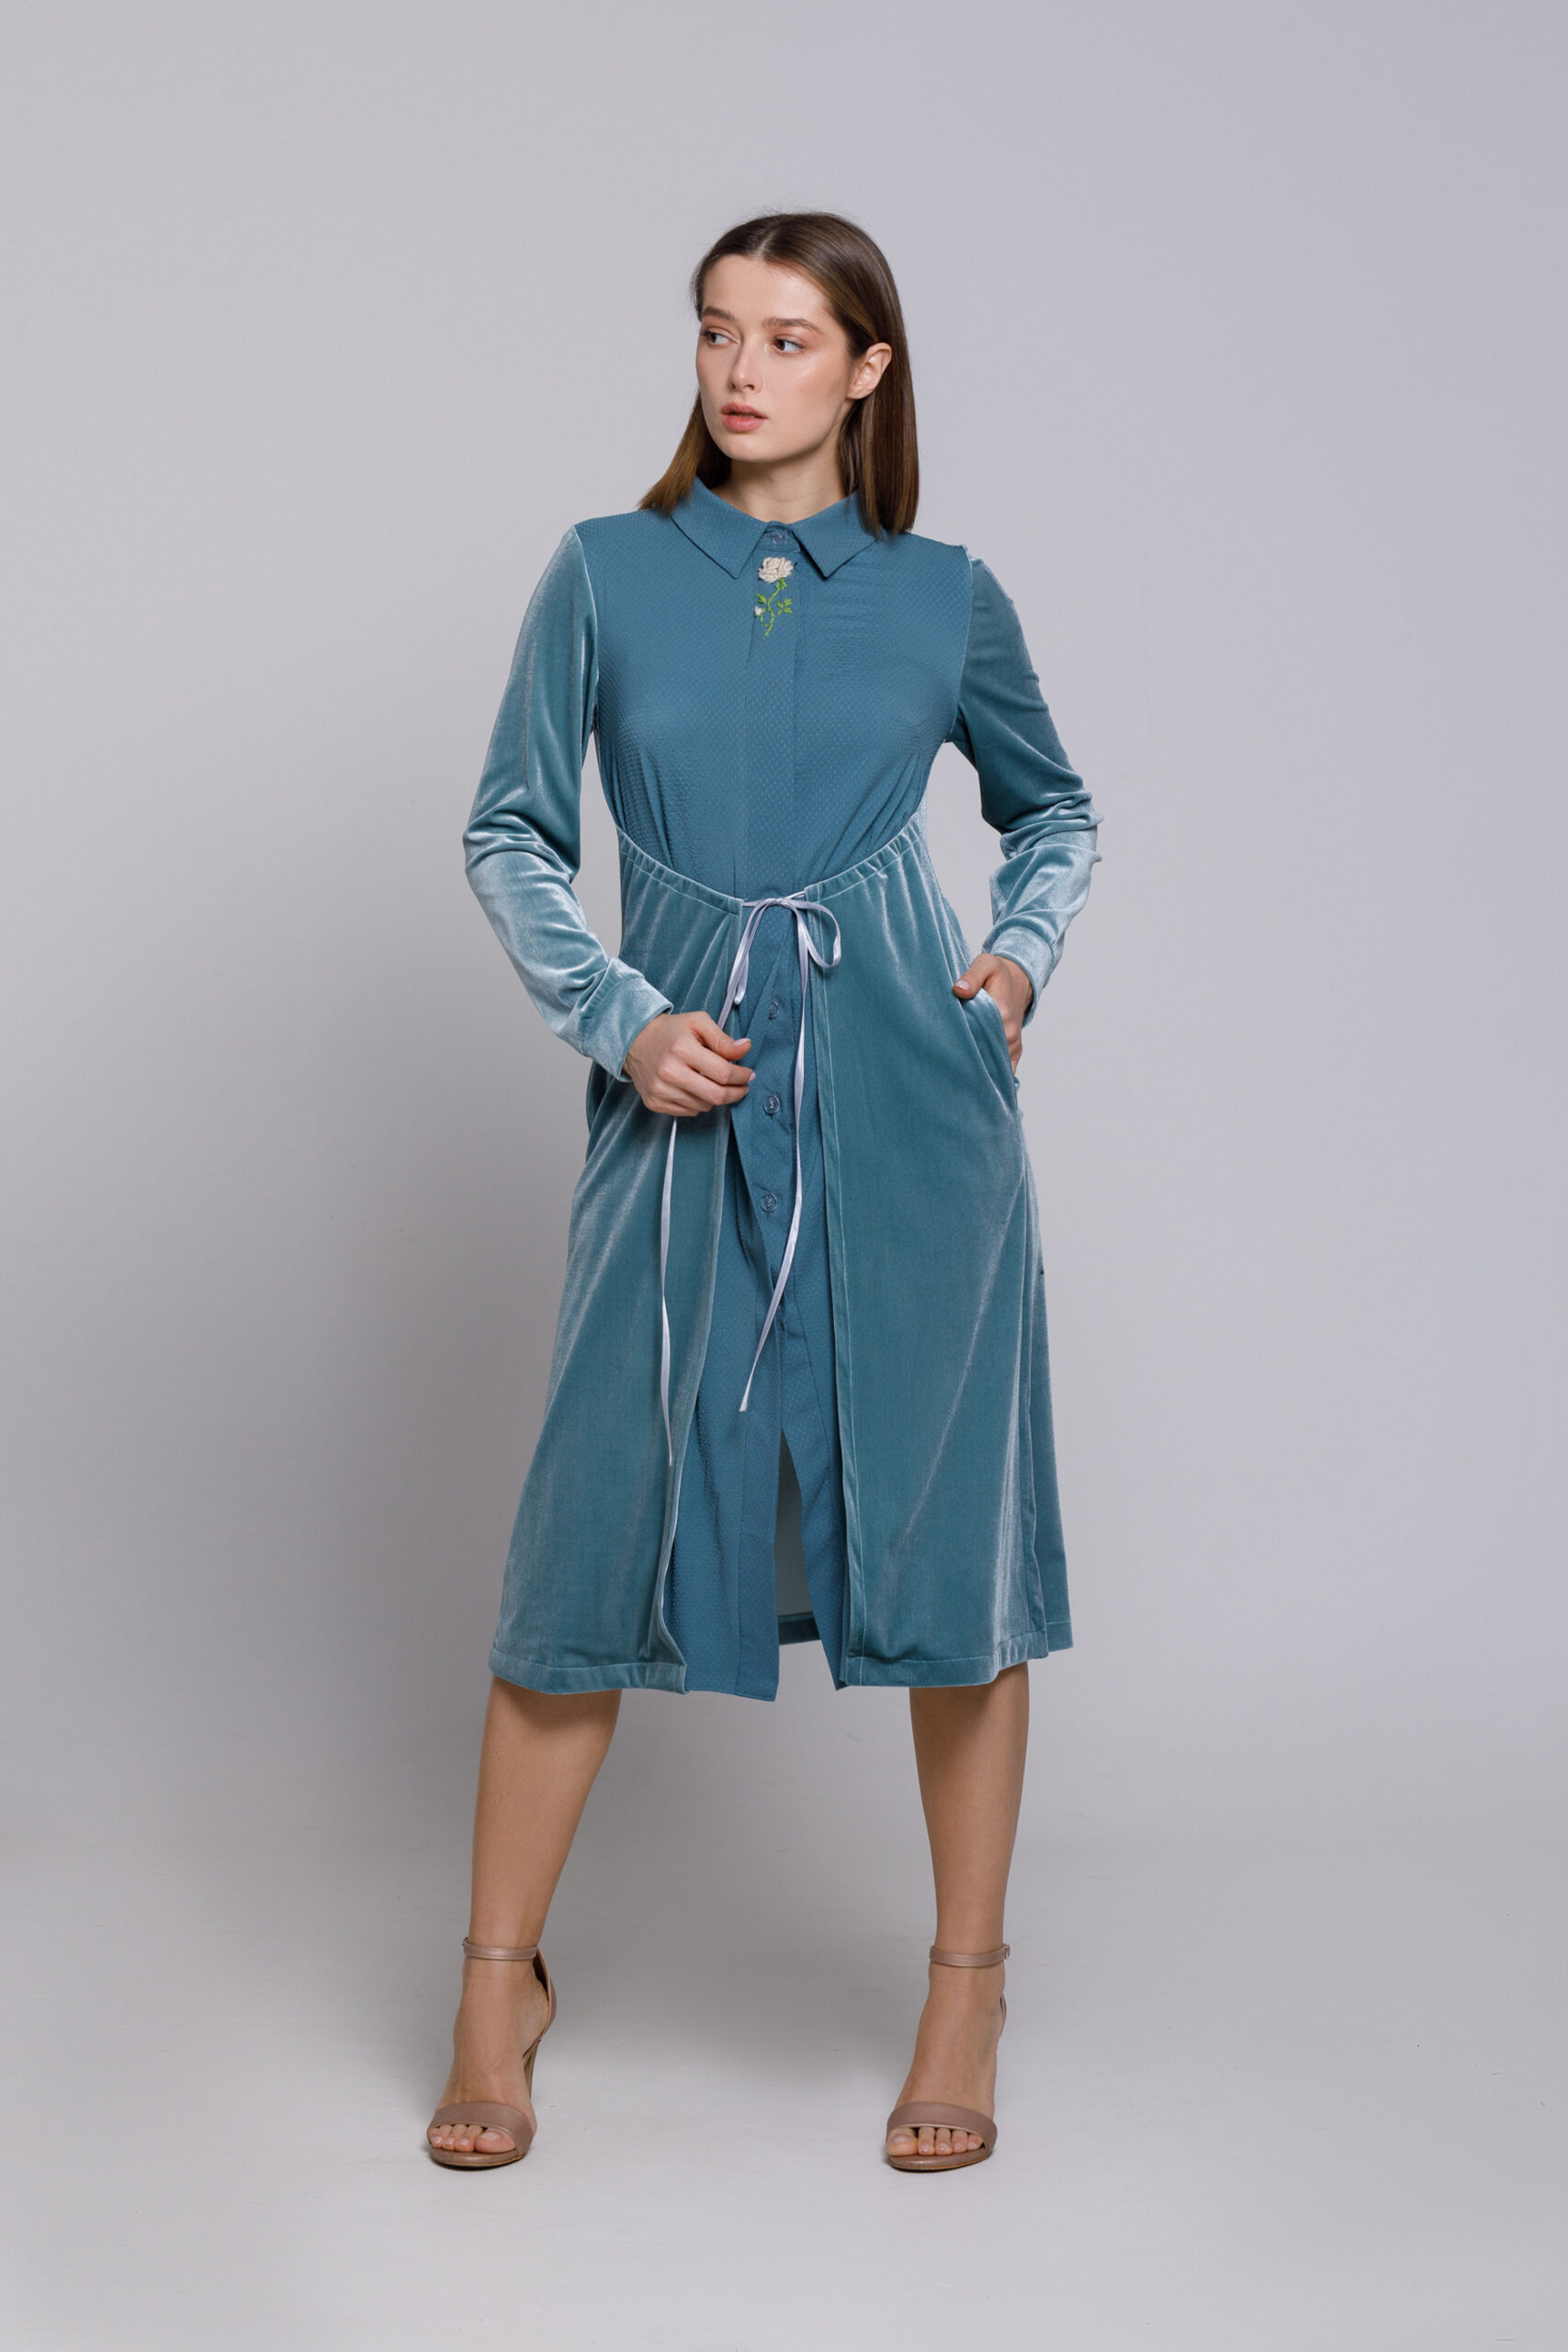 STORY dress in blue velvet and viscose. Natural fabrics, original design, handmade embroidery